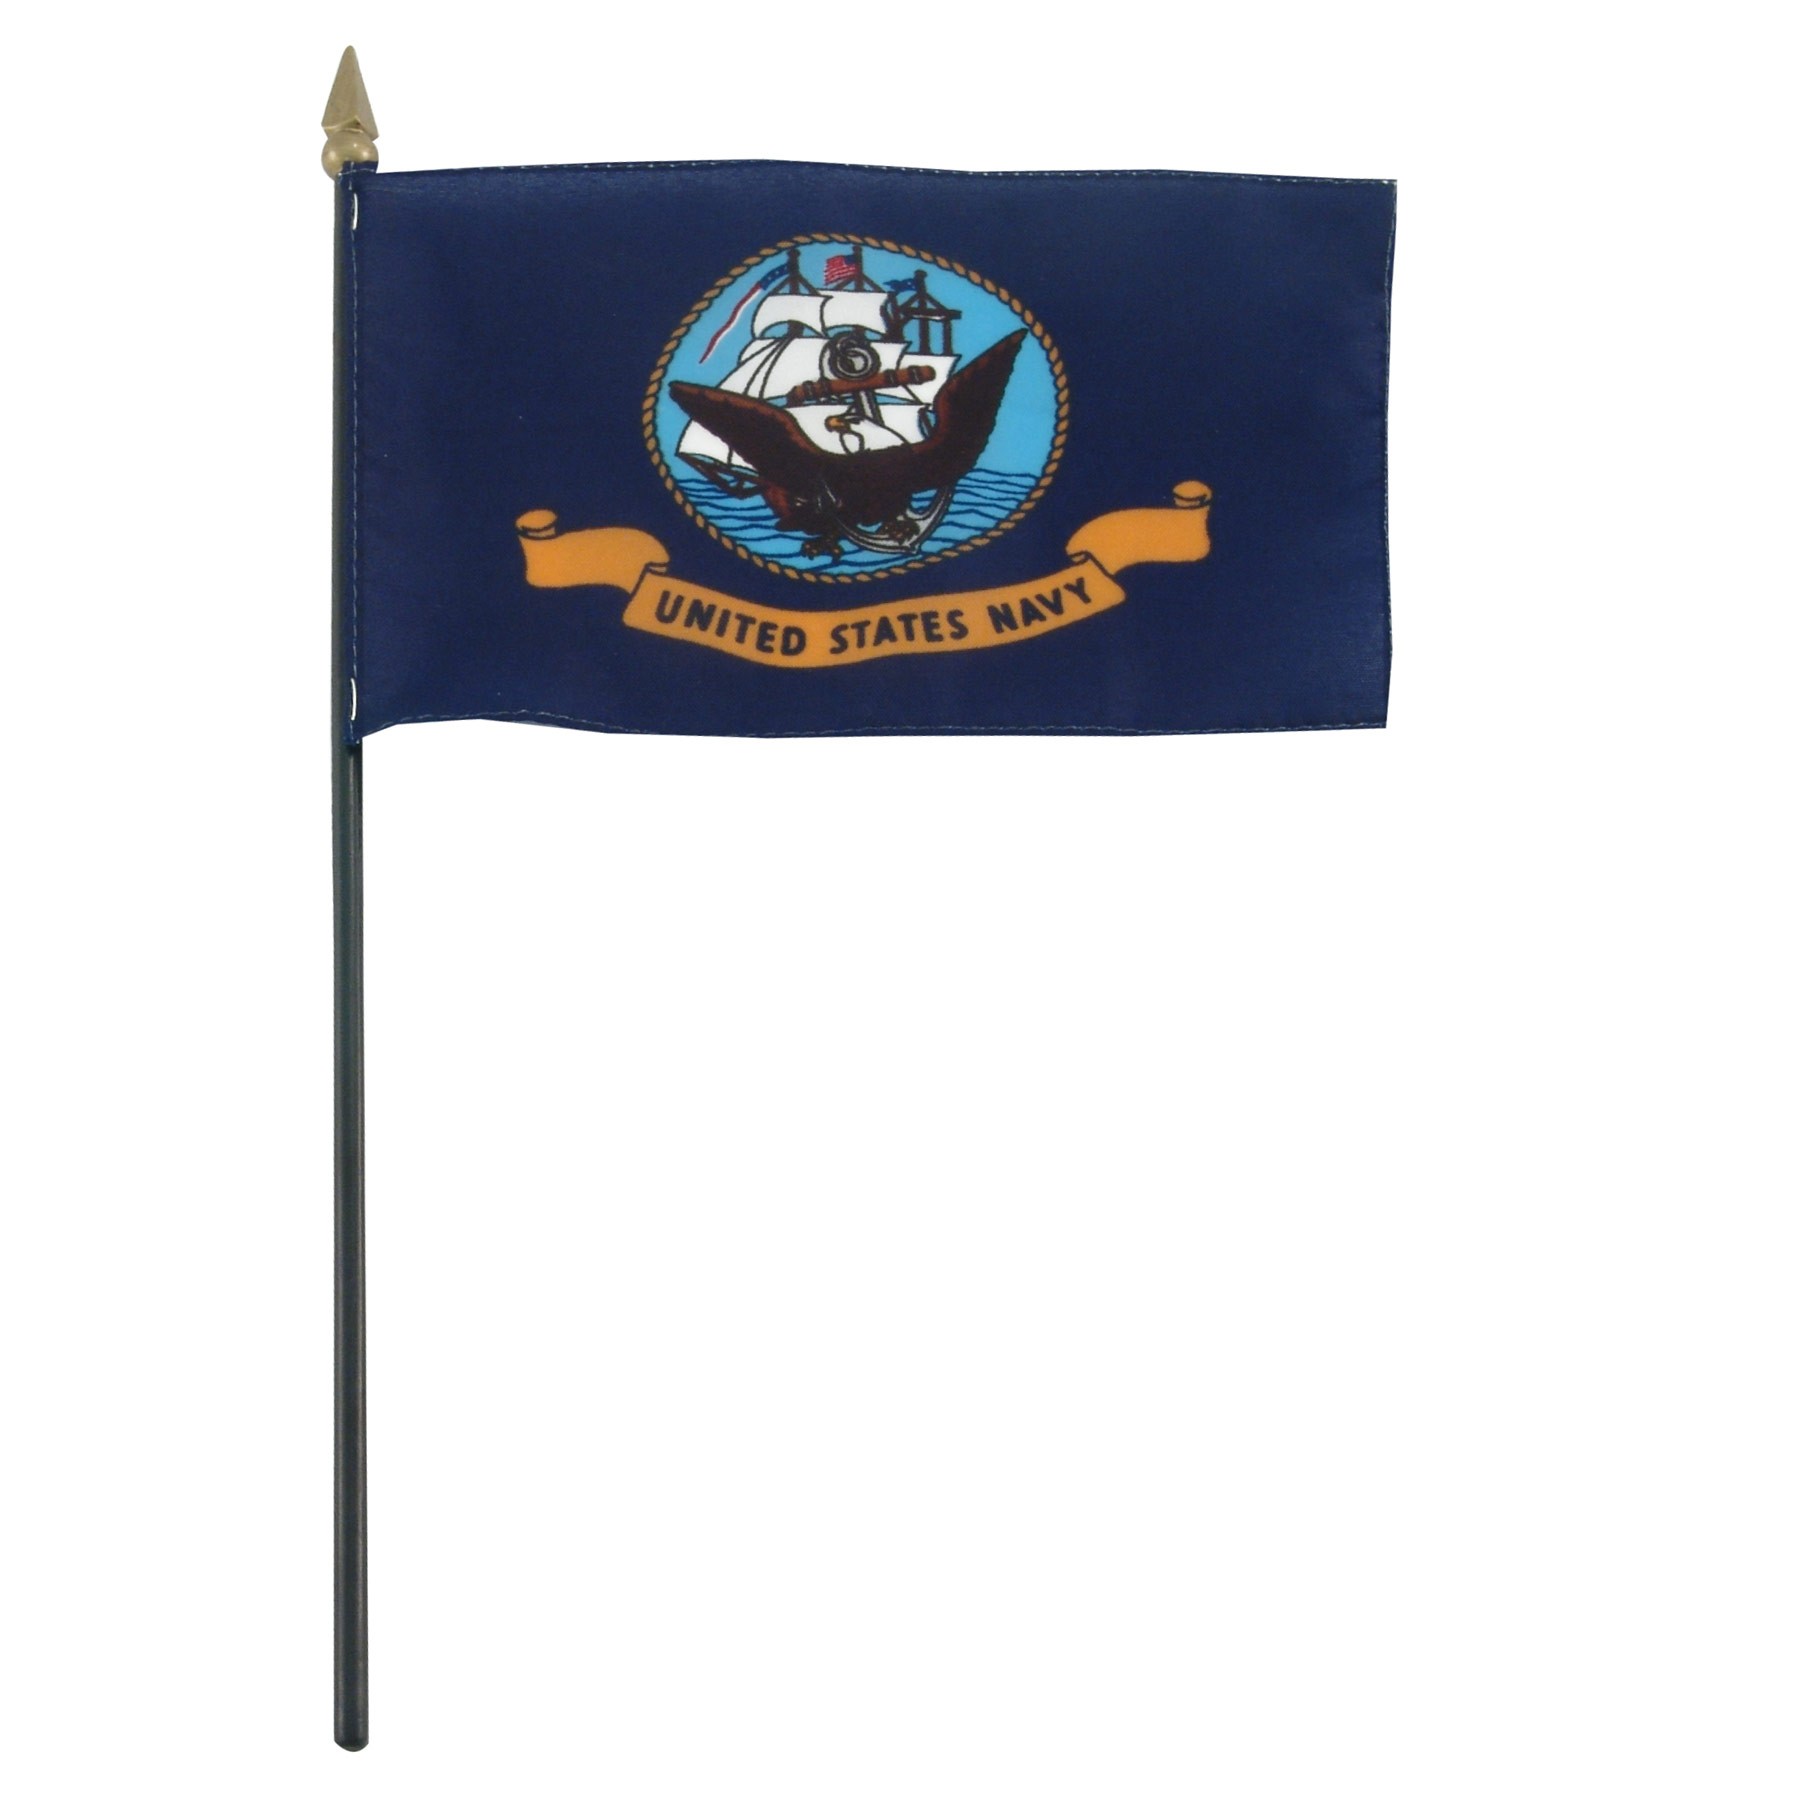 Navy flag 4 x 6 inch